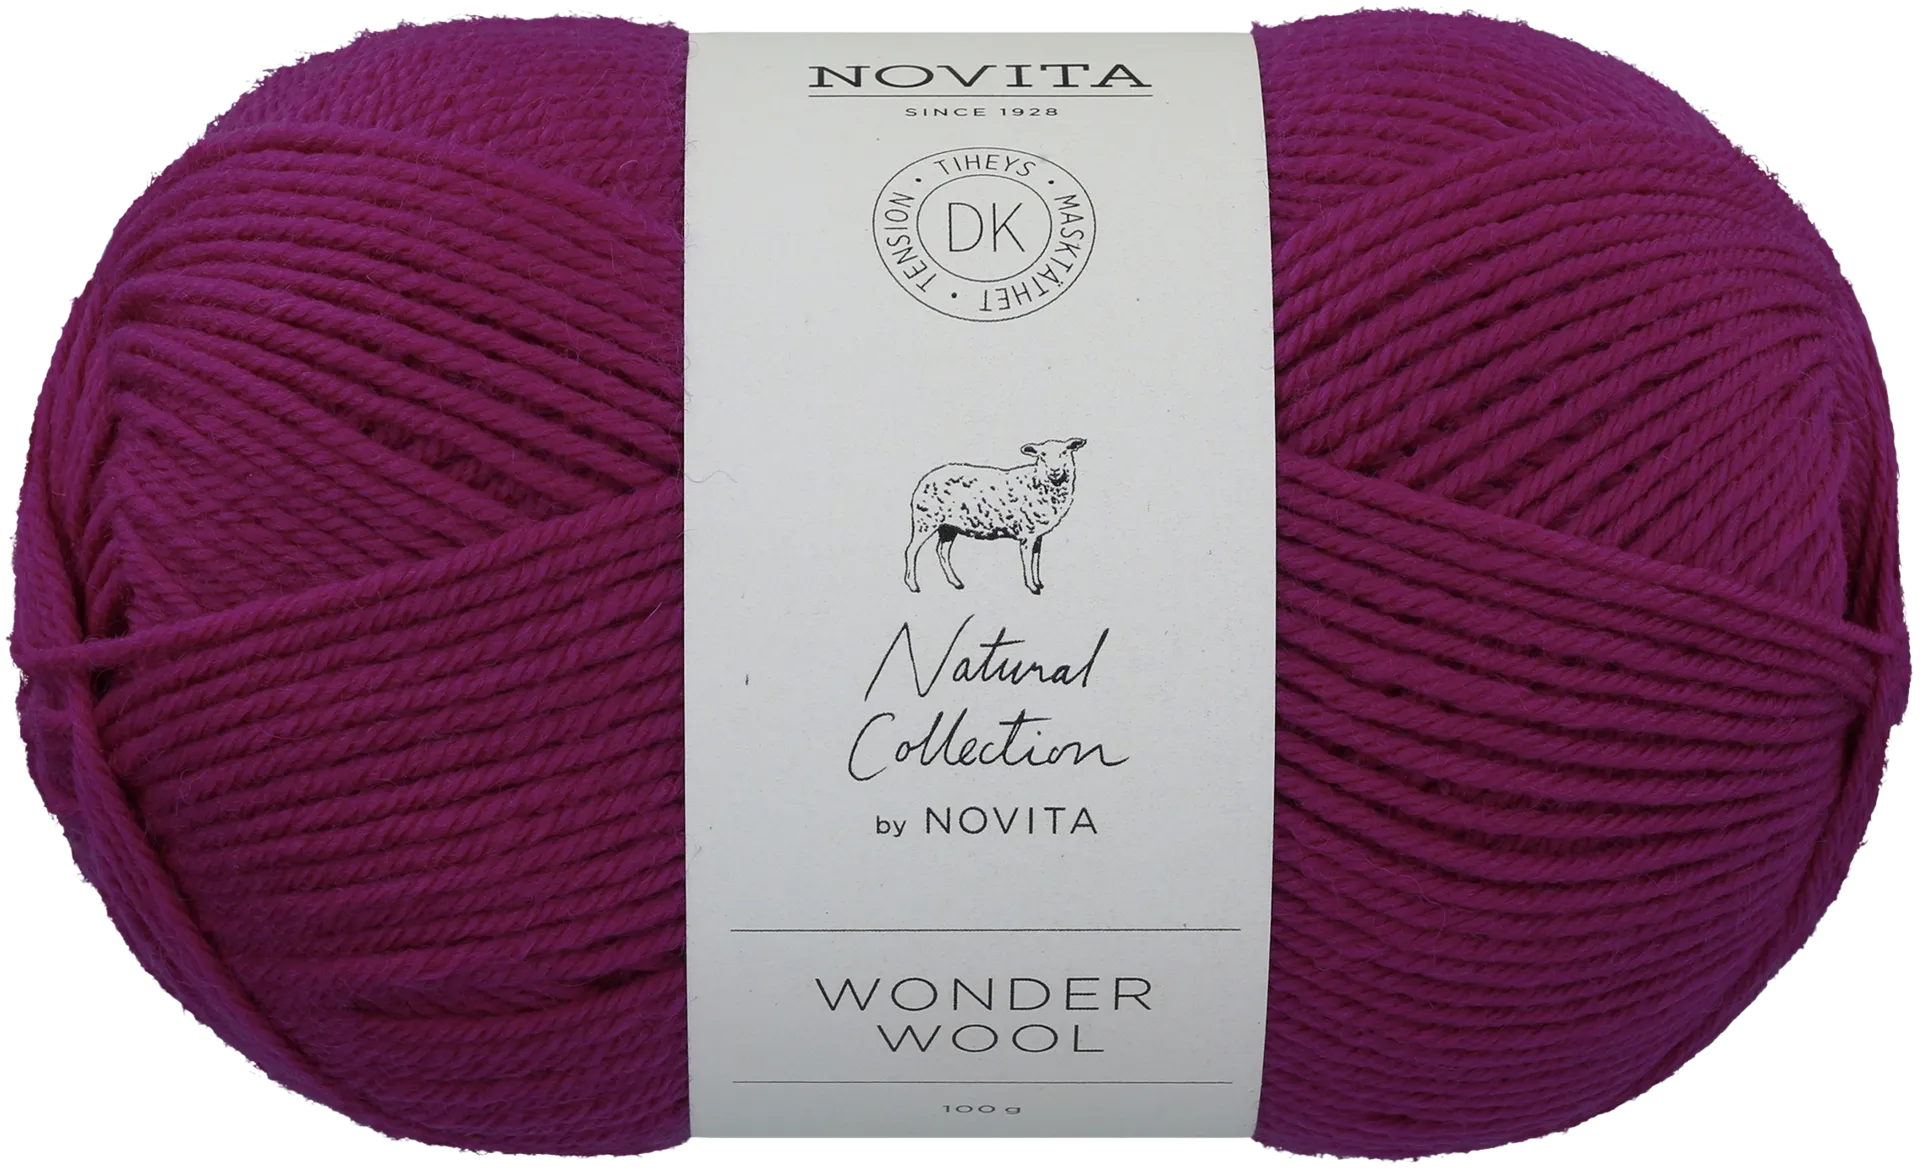 Novita Lanka Wonder Wool DK 100 g neilikka 780 - 1